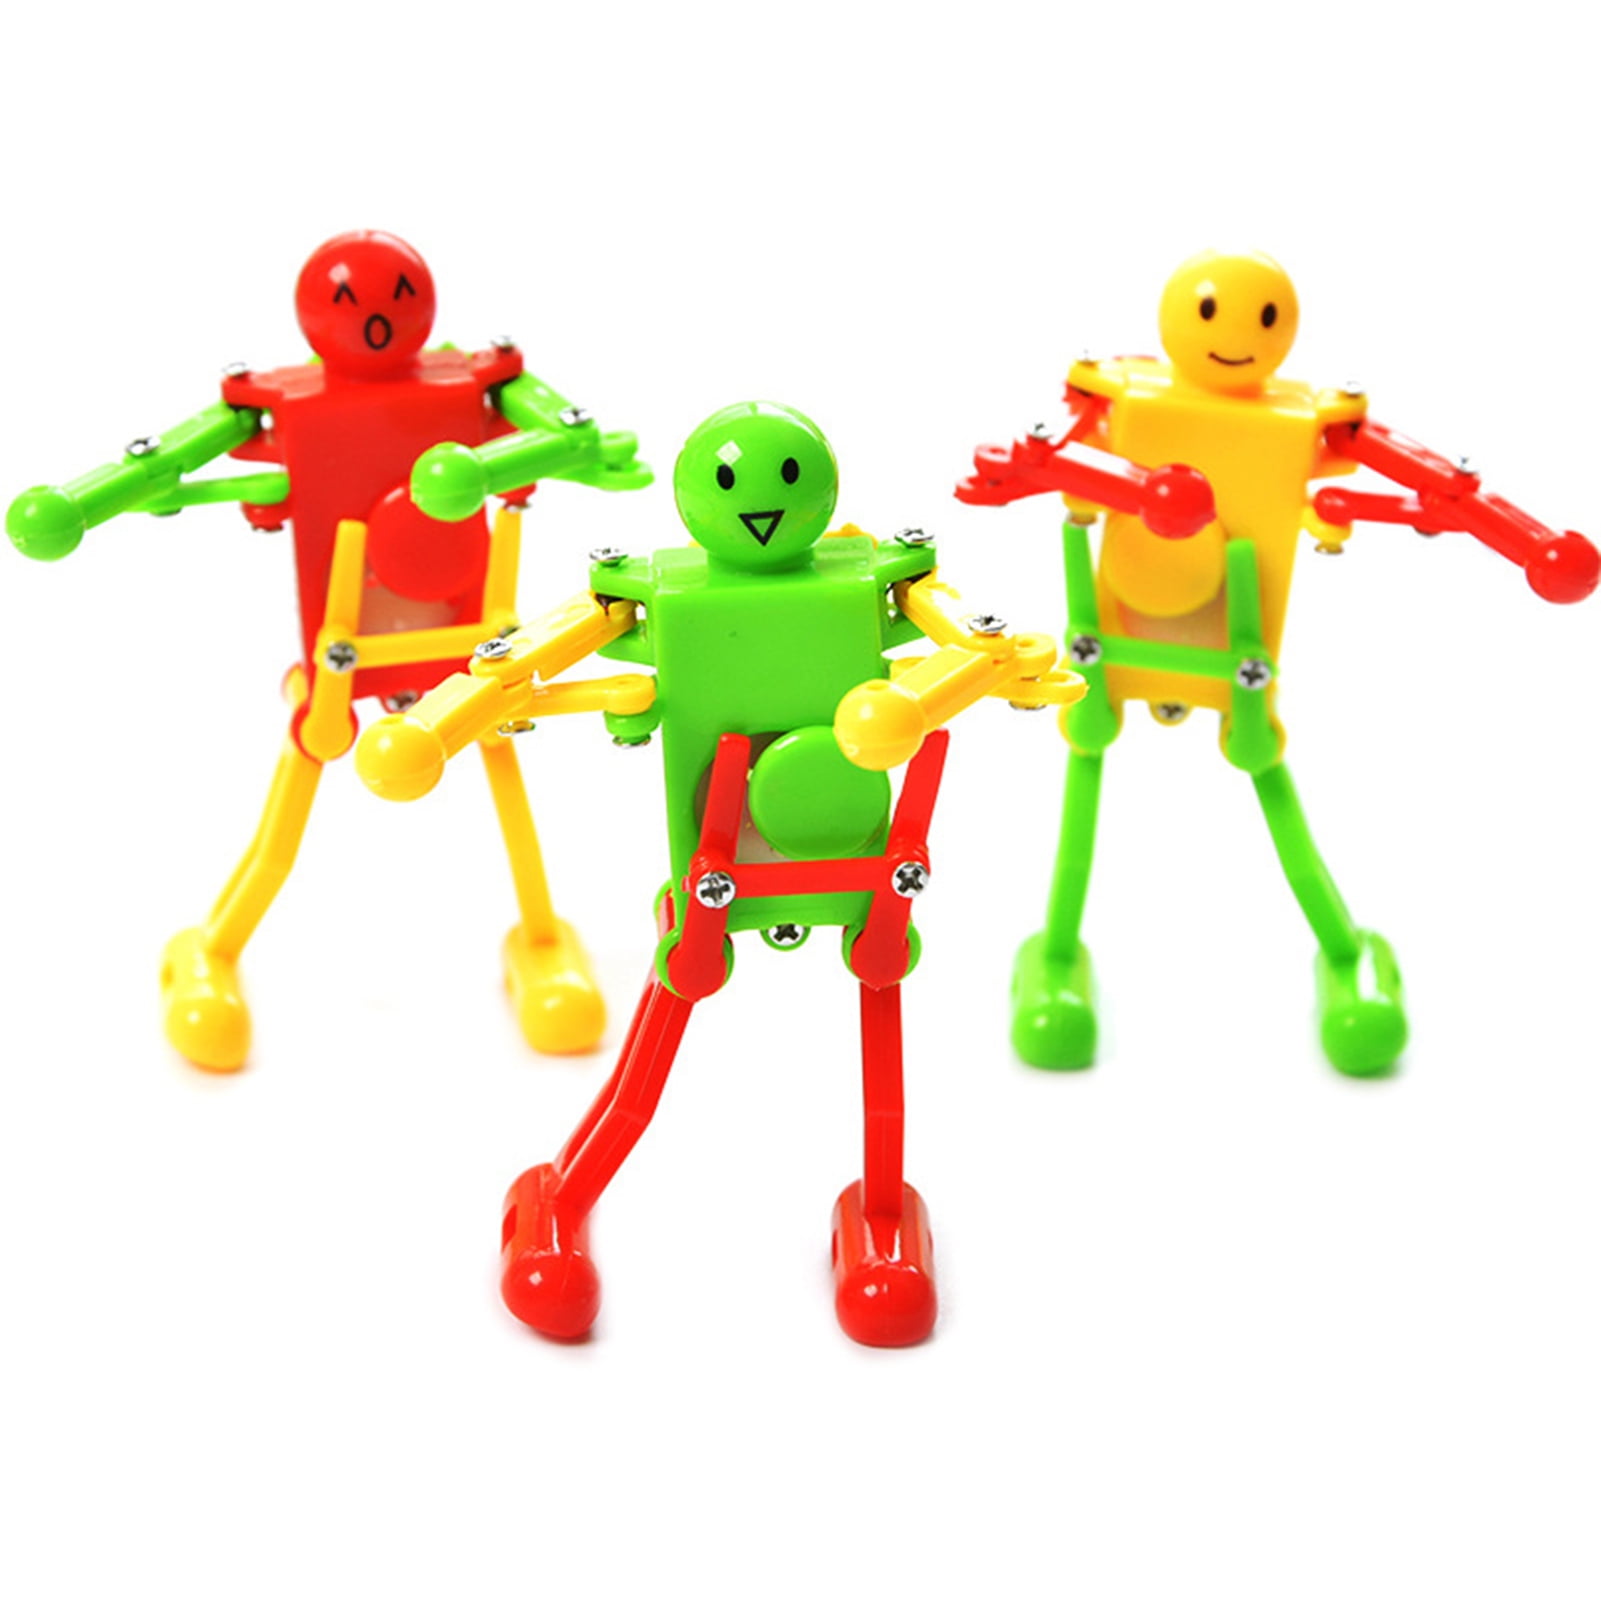 Girls Boys Dancing Clockwork Spring Wind Up Robot Toy For Children Kids Gift 